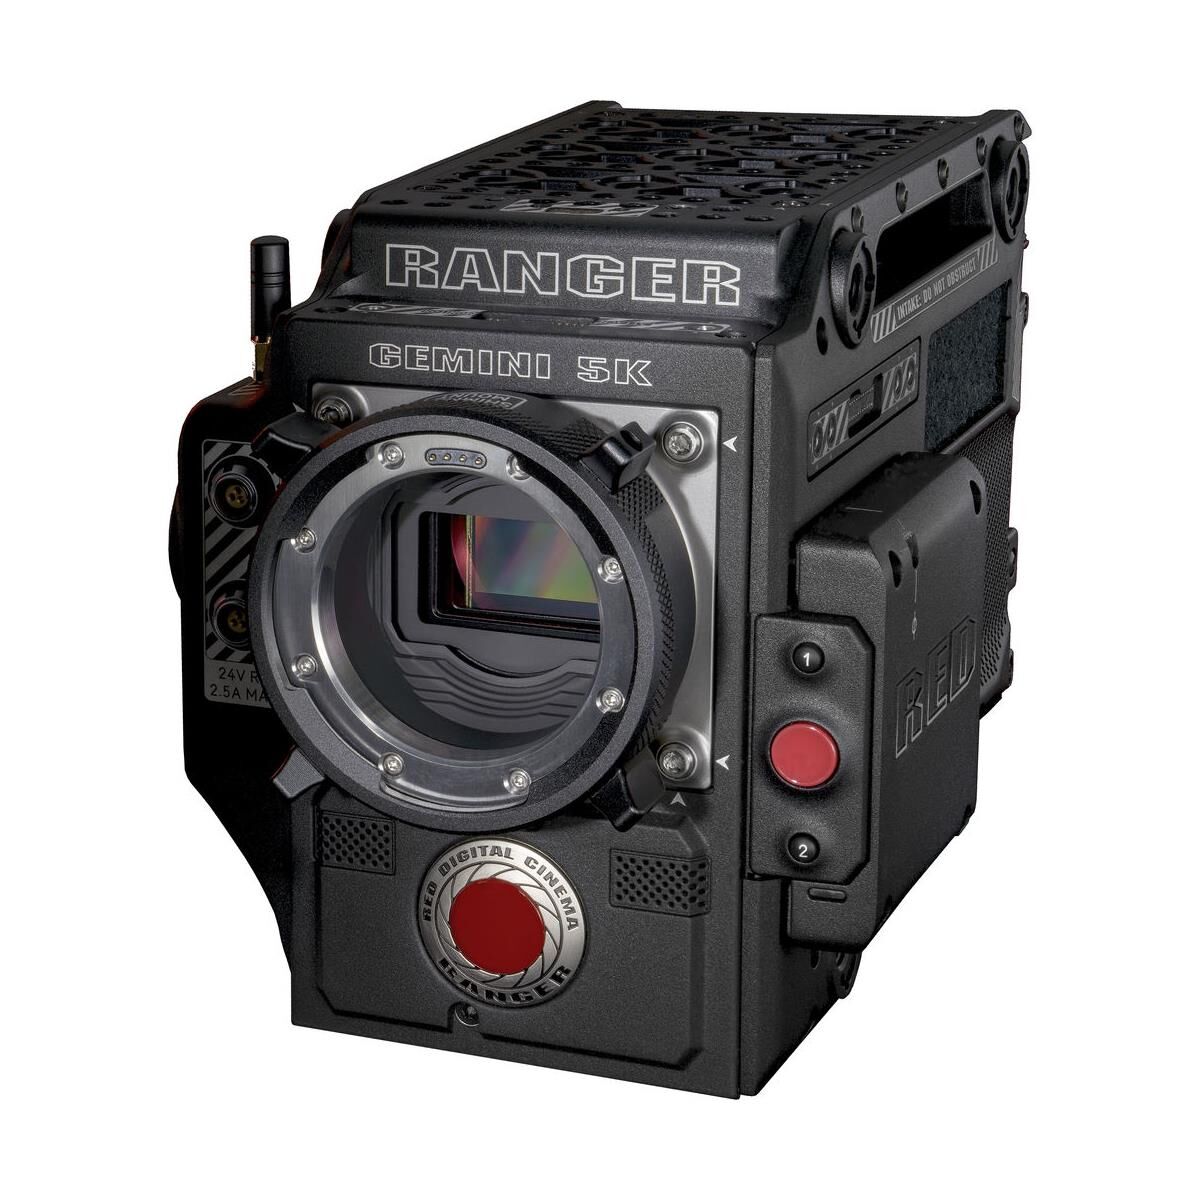 RED Digital Cinema RED RANGER Camera System, GEMINI 5K S35 Sensor, Gold Mount